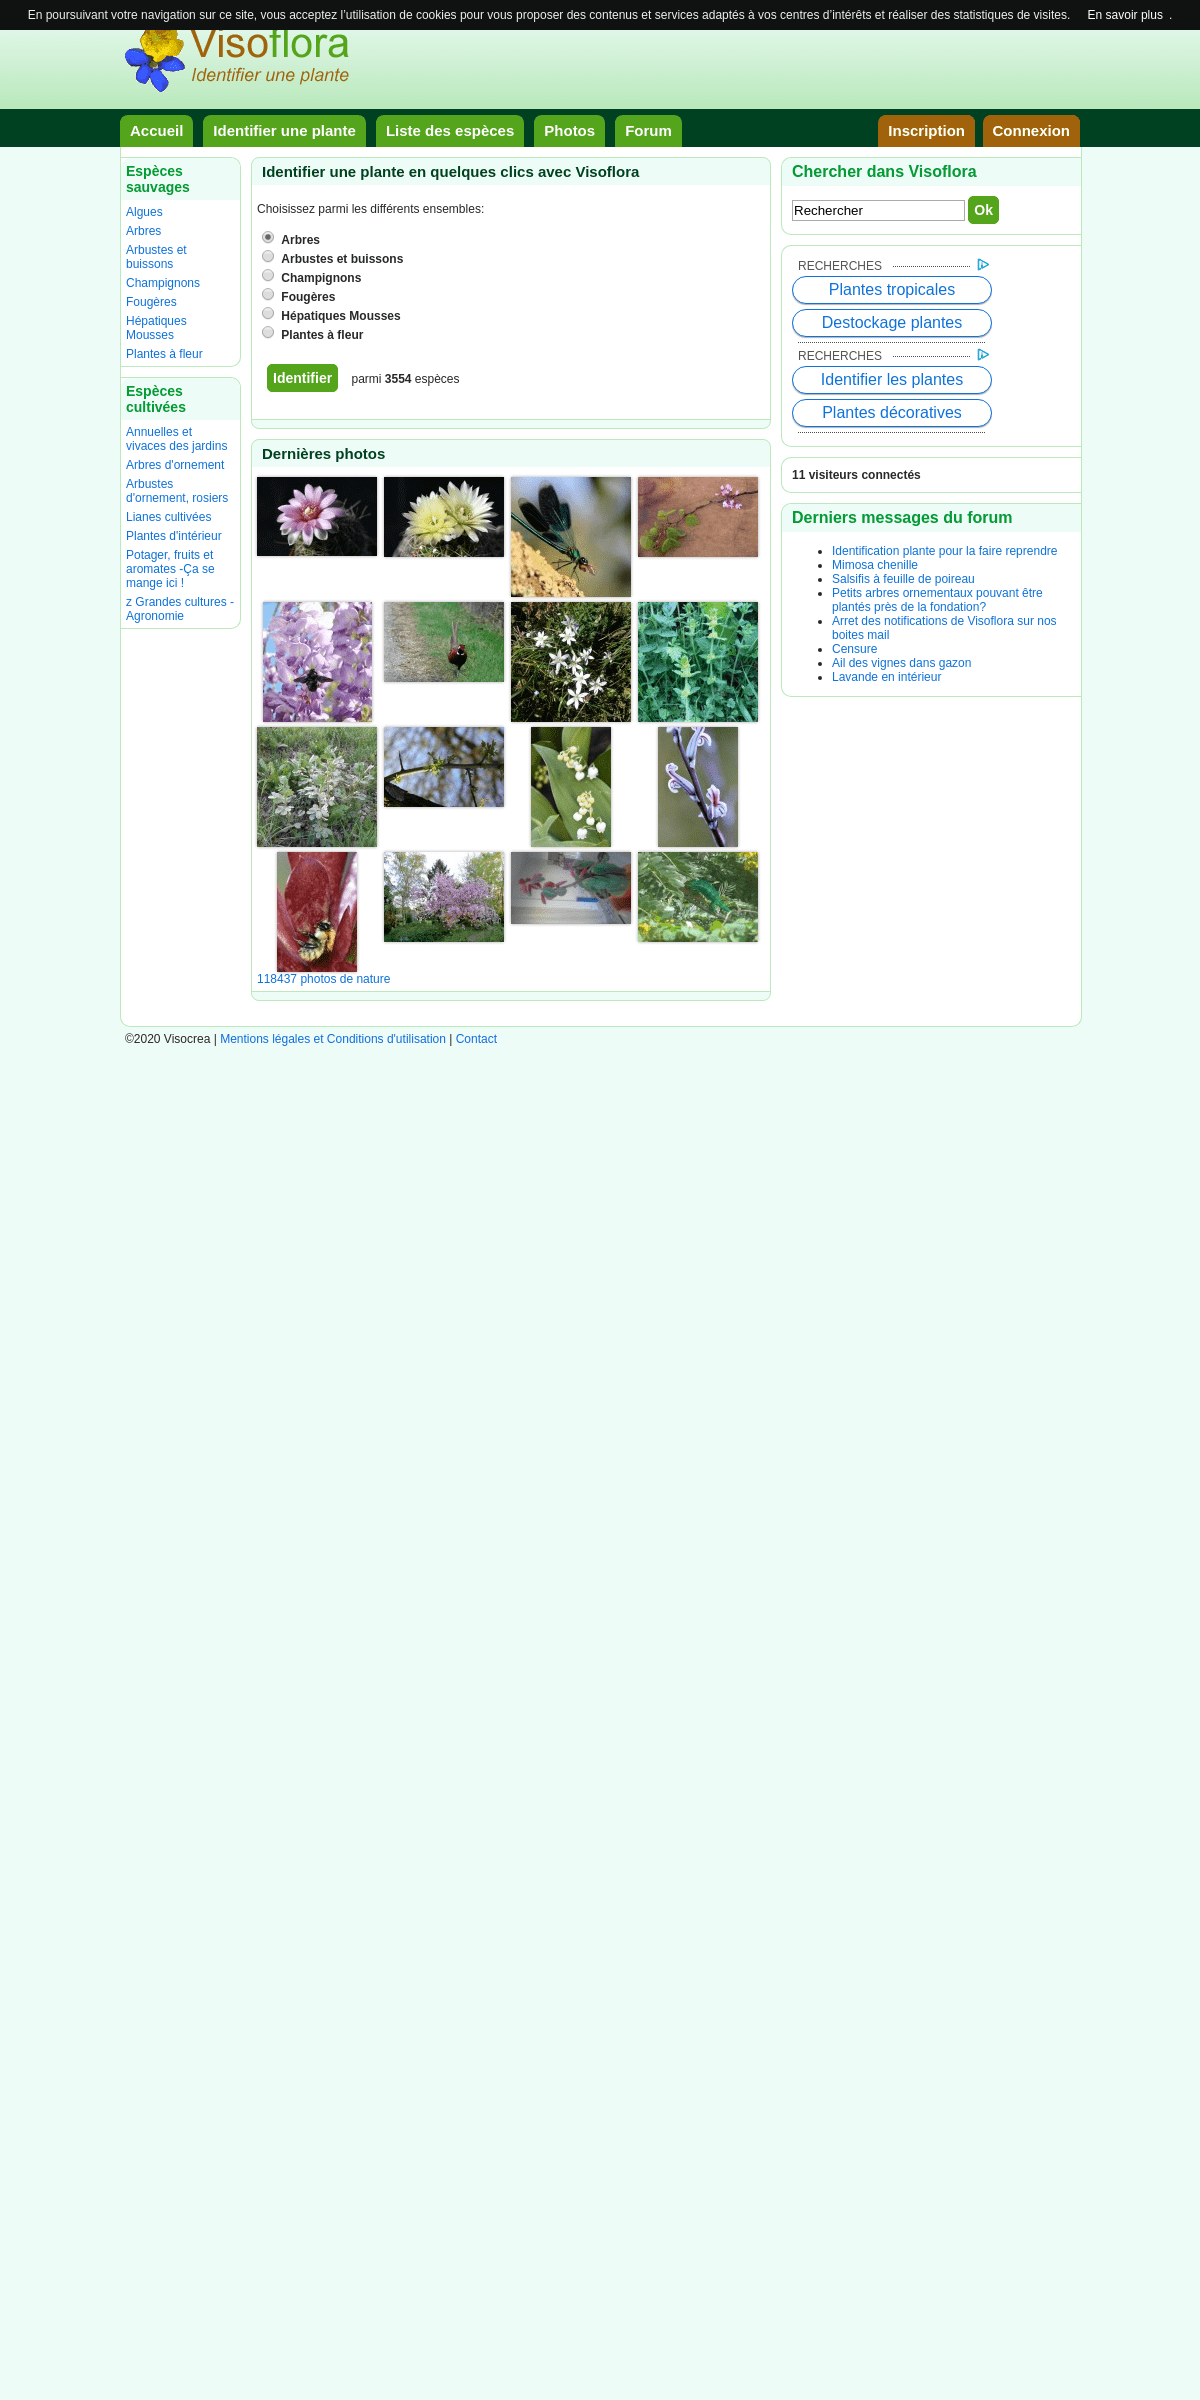 A complete backup of visoflora.com